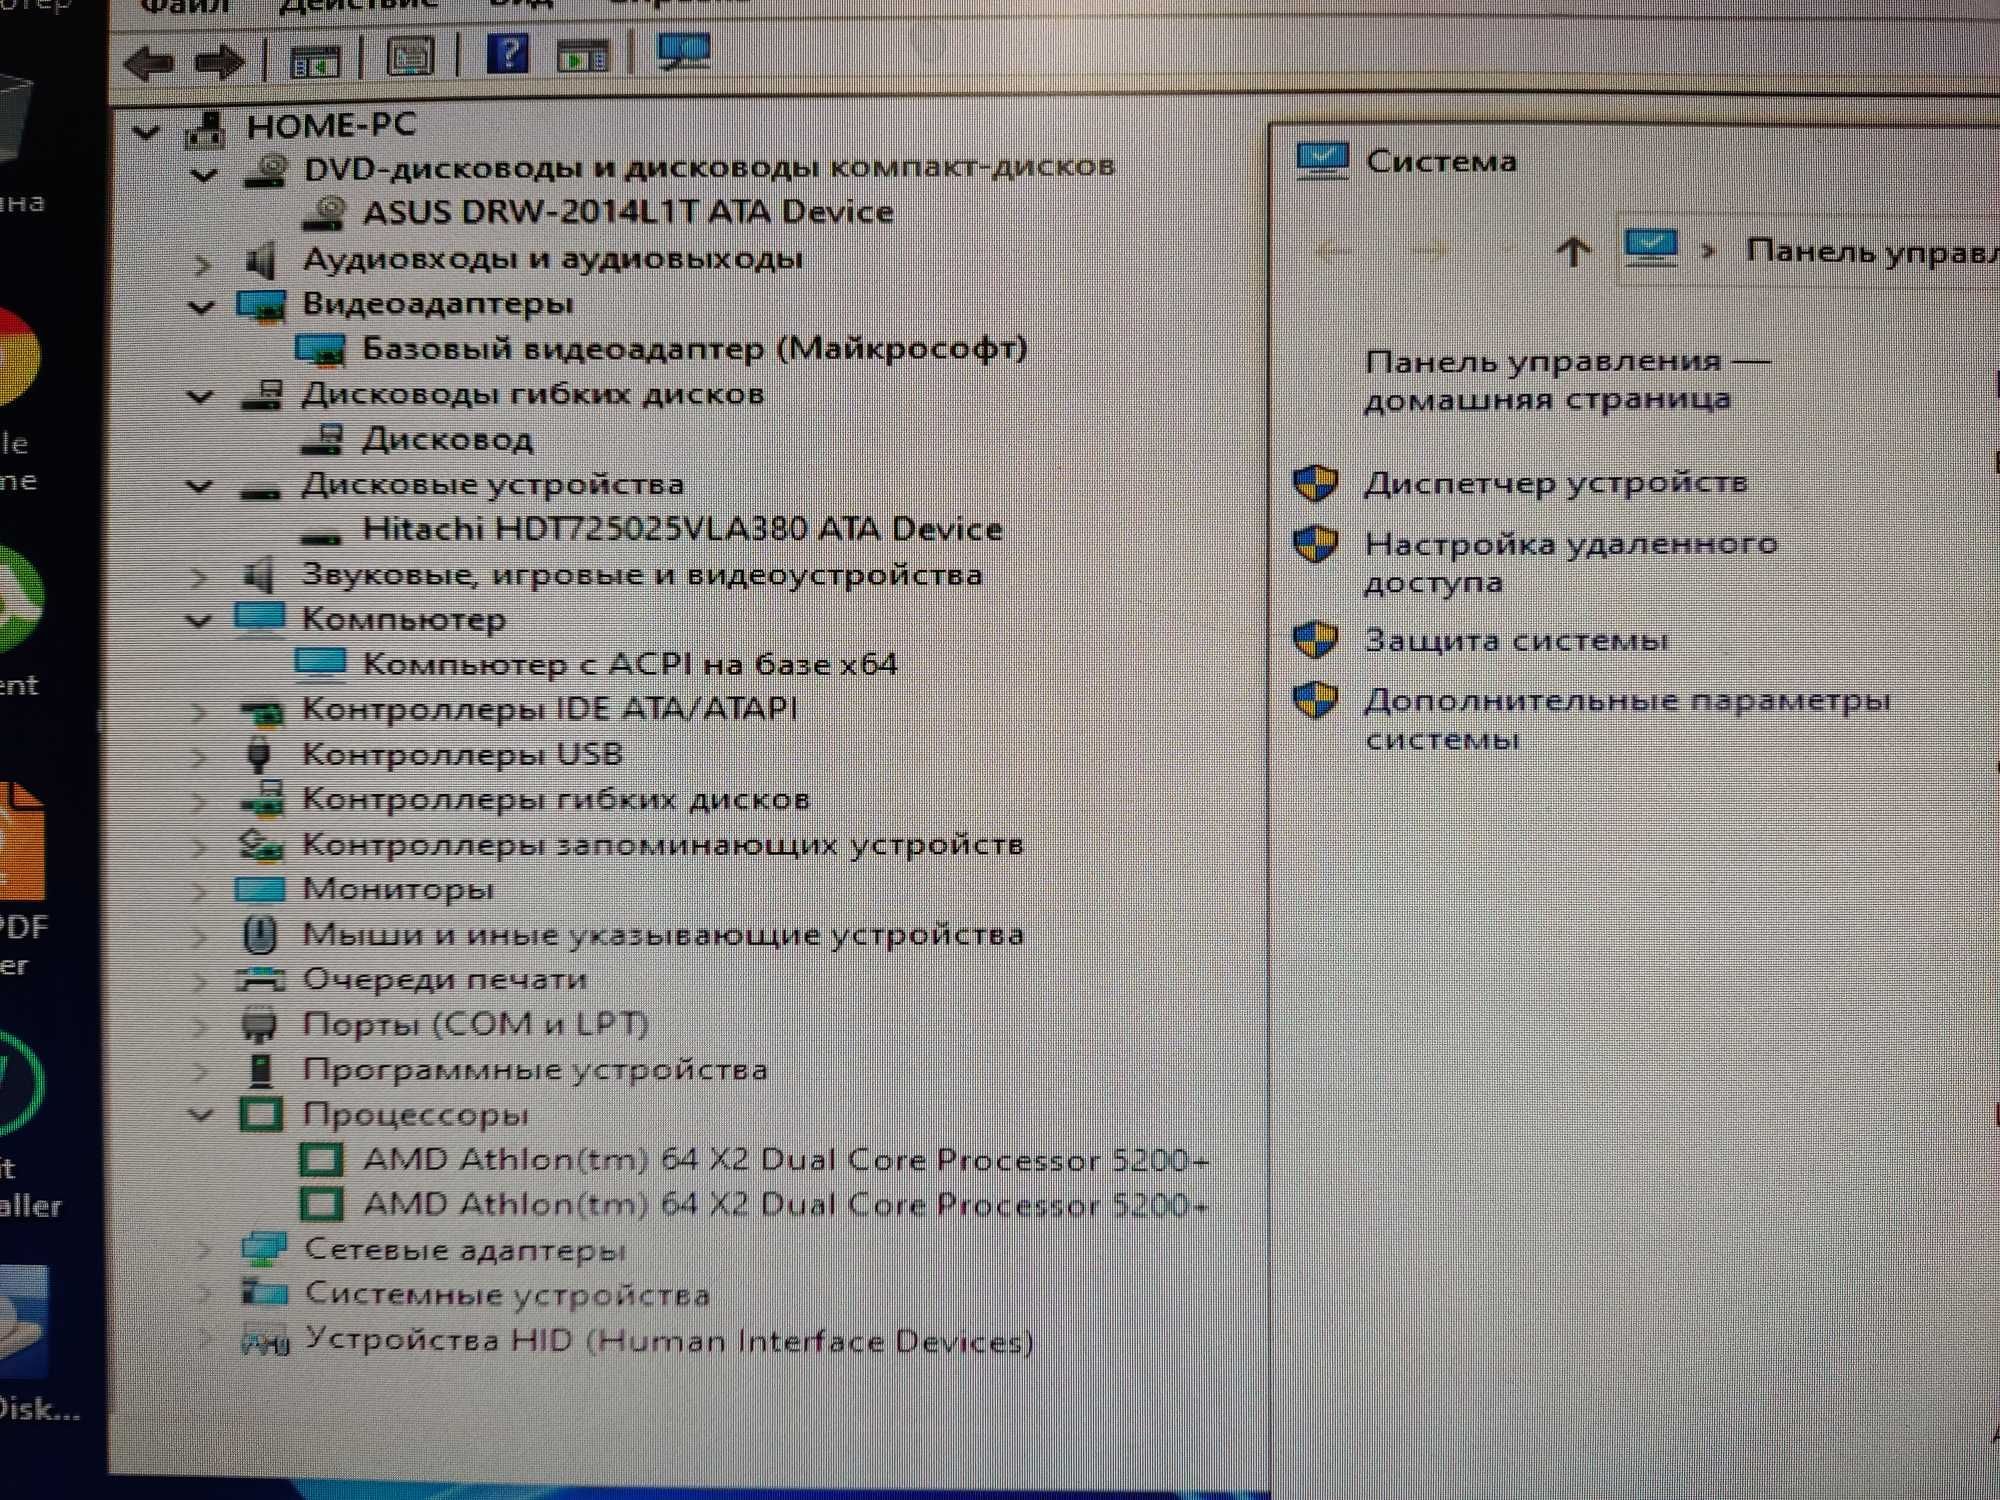 ПК Компьютер и Монитор, amd 5200+ 2.7 ghz, ASUS m2avm, 8GB, ati hd3650